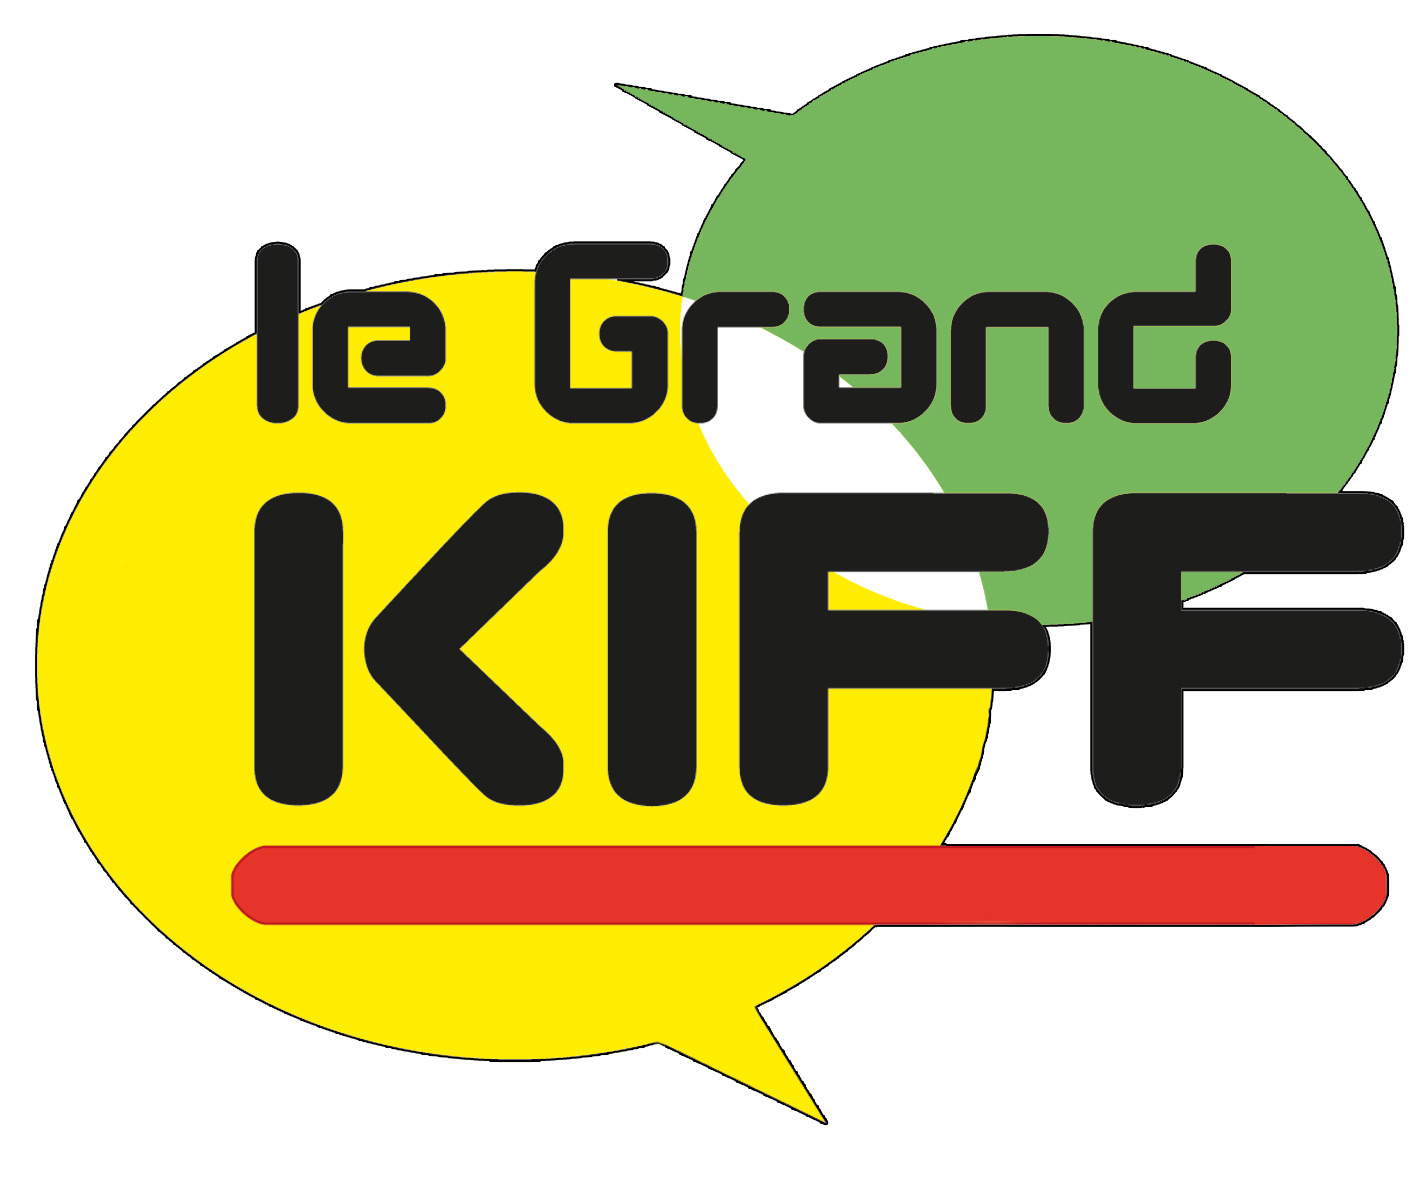 Logo LGK